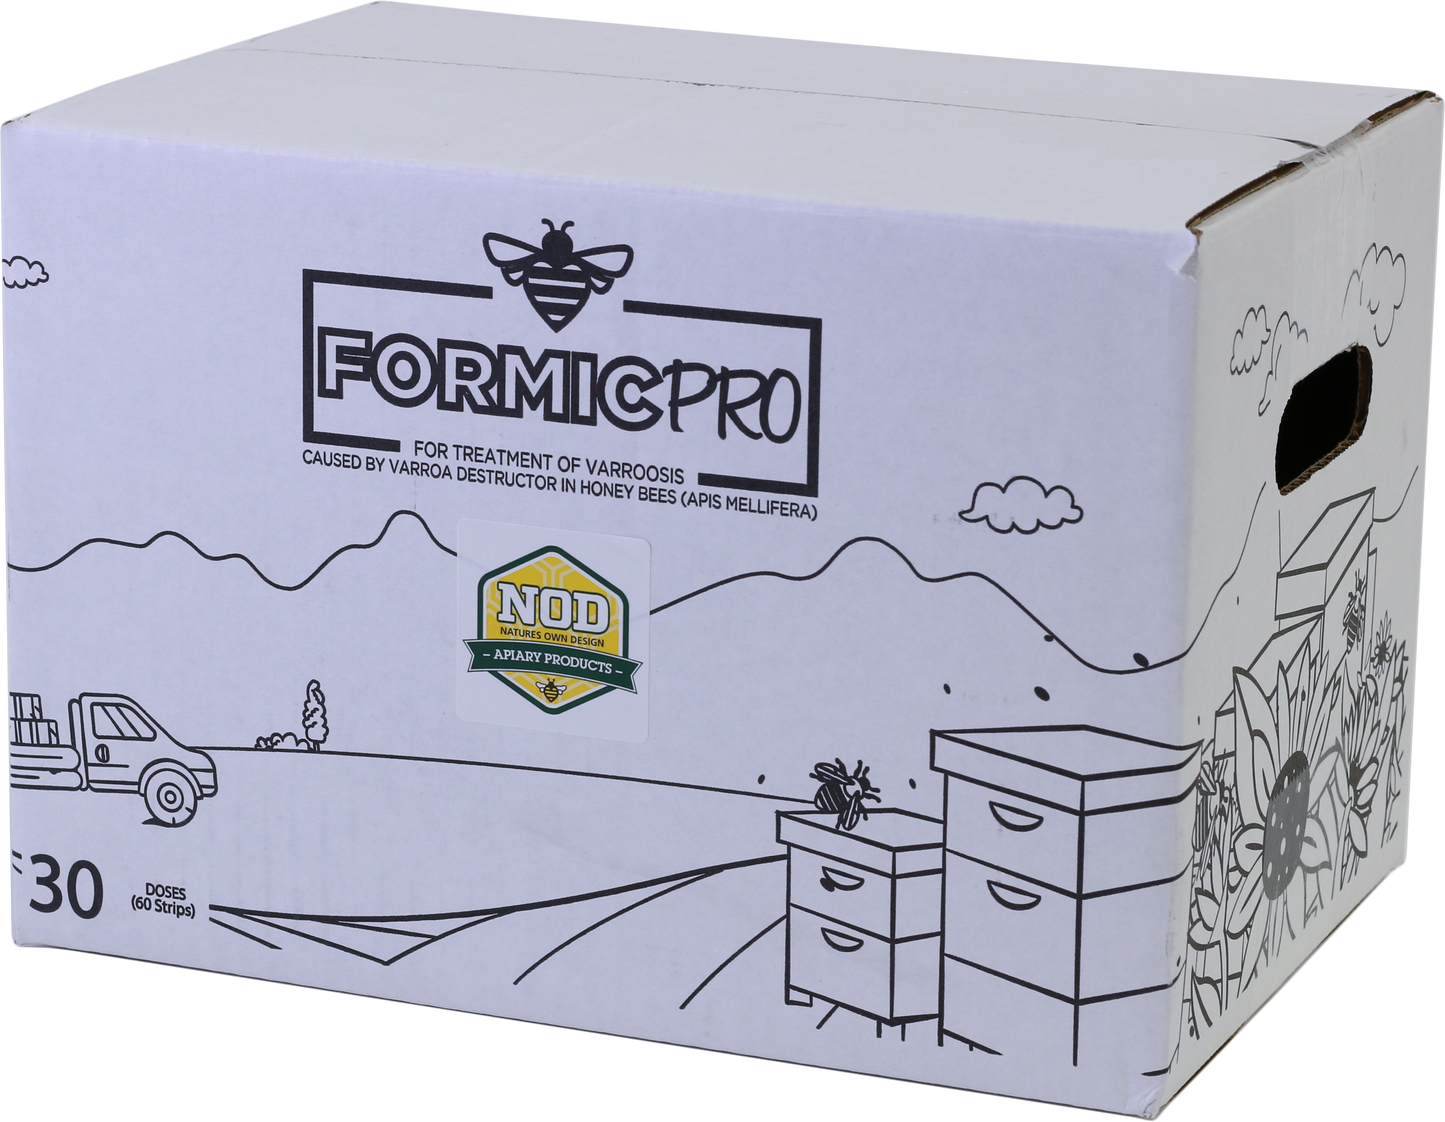 Formic Pro